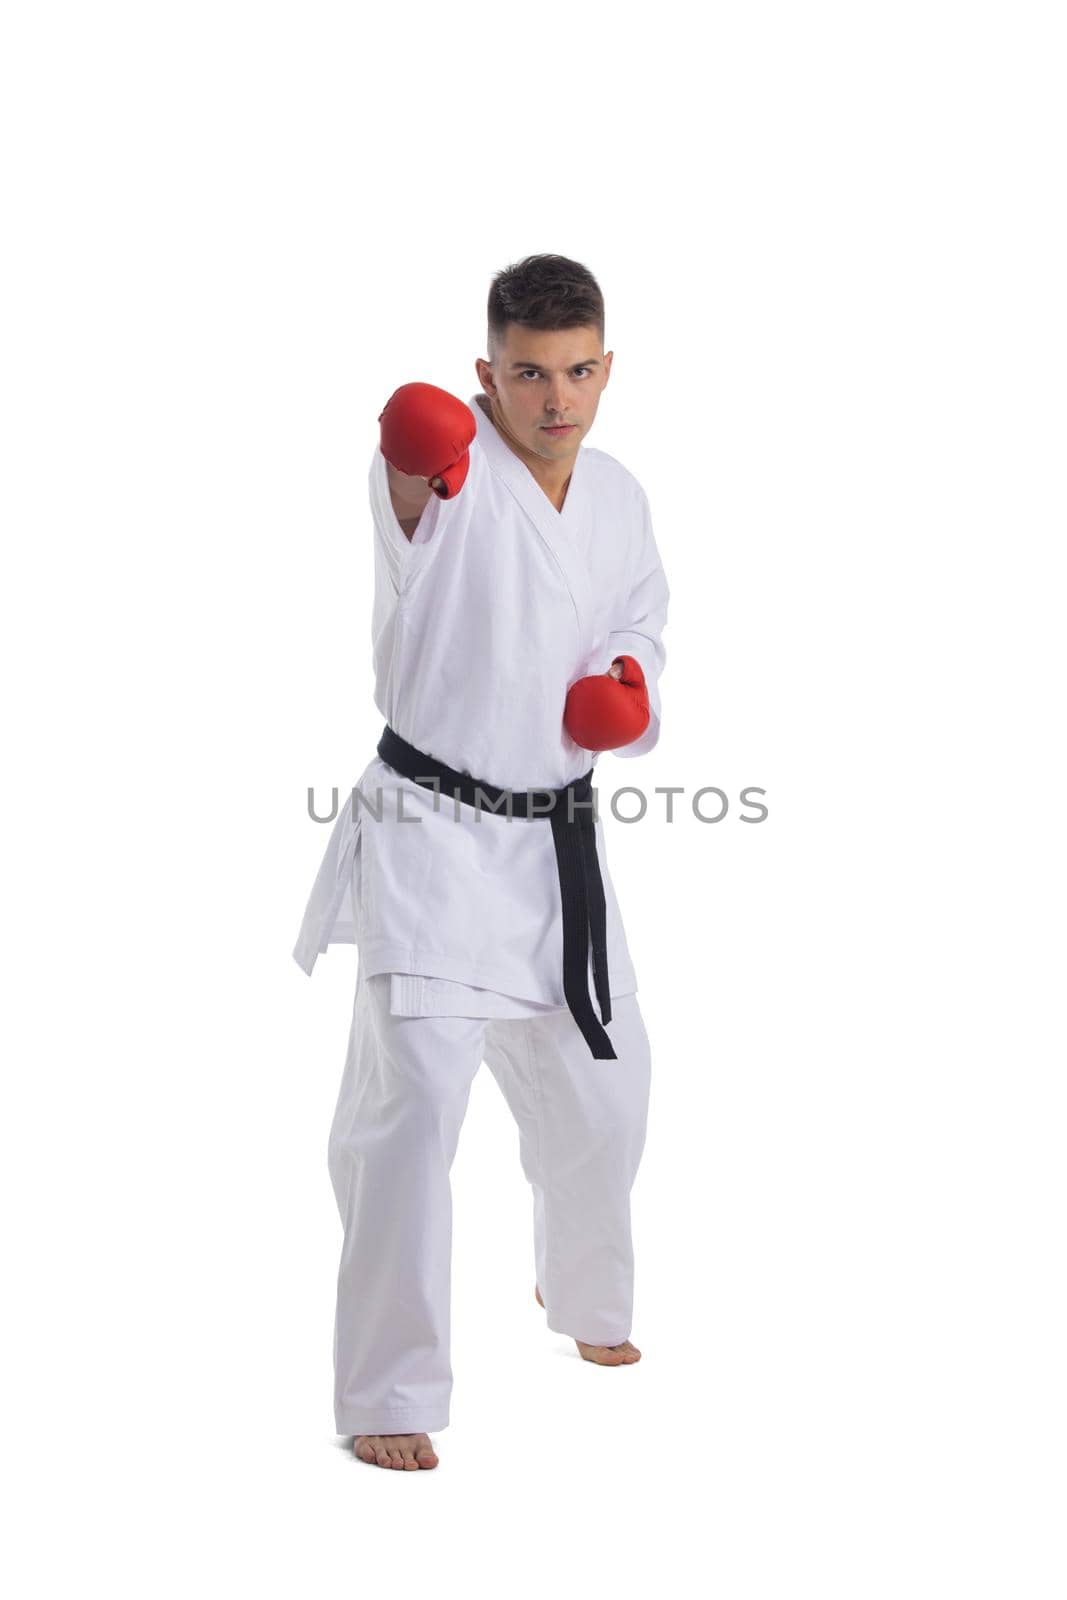 Karate fighter man hit by ALotOfPeople